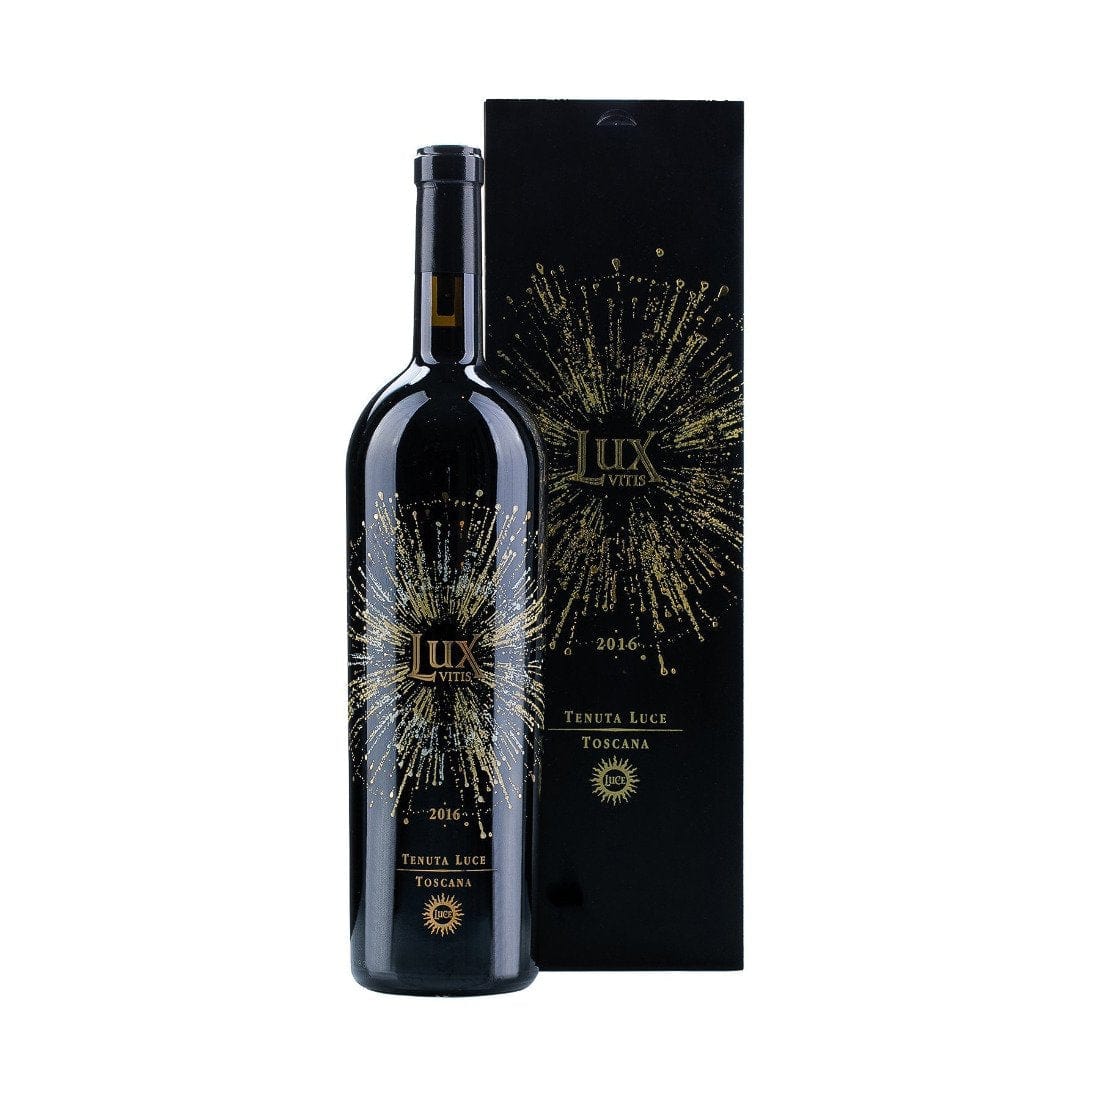 Lux Vitis 2018 Igt Toscana Mathusalem 6 litri - Frescobaldi-Vinolog24.com